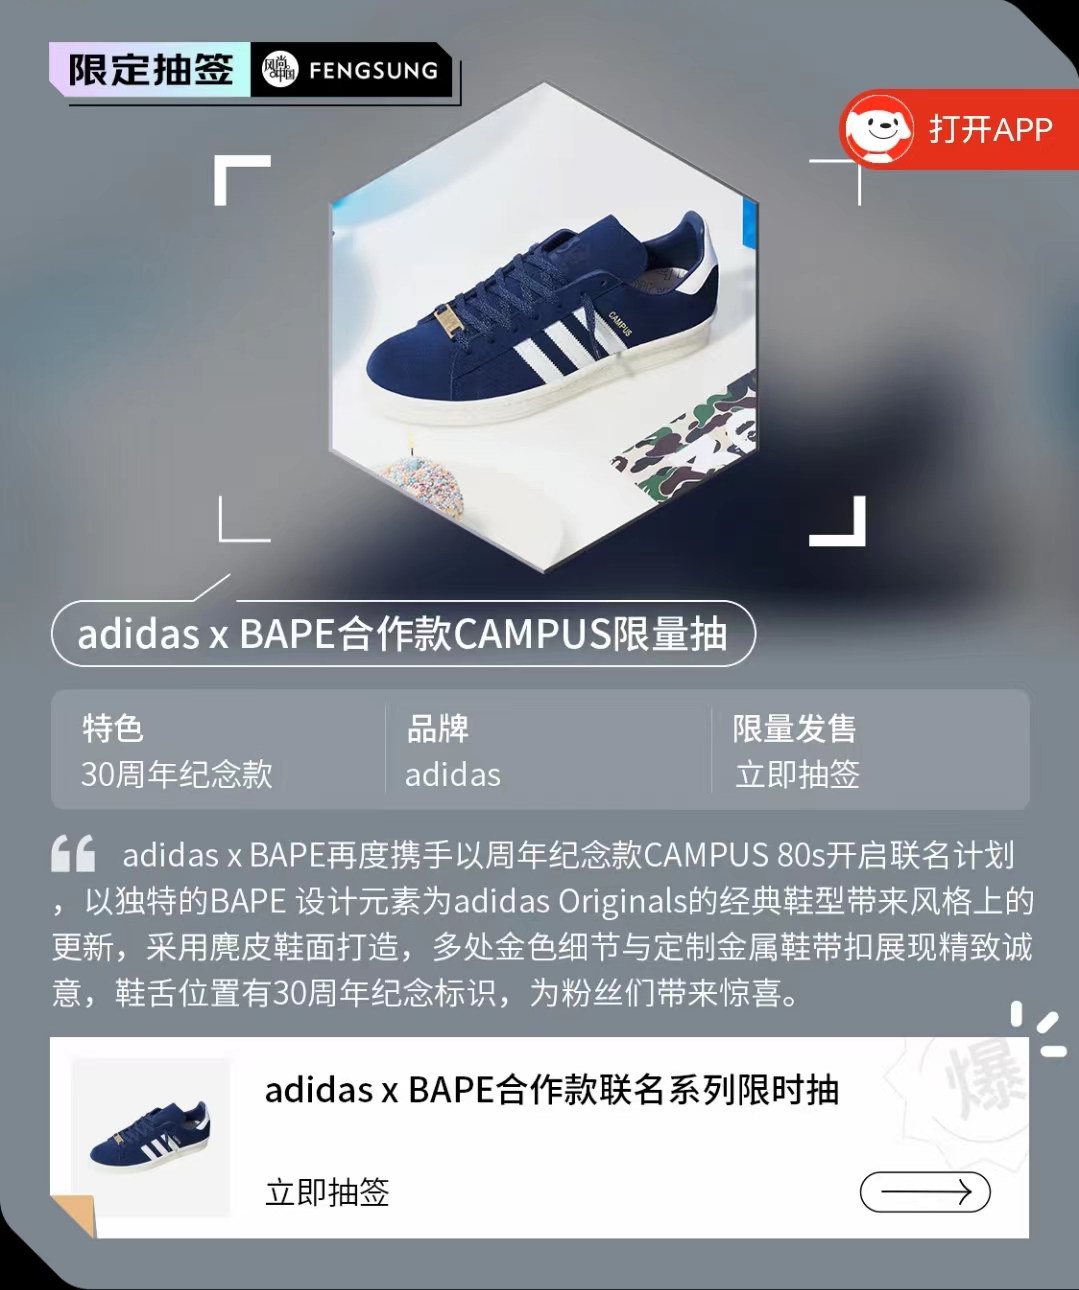 adidas再度携手BAPE，以30周年纪念款CAMPUS 80s开启联名计划_风尚中国